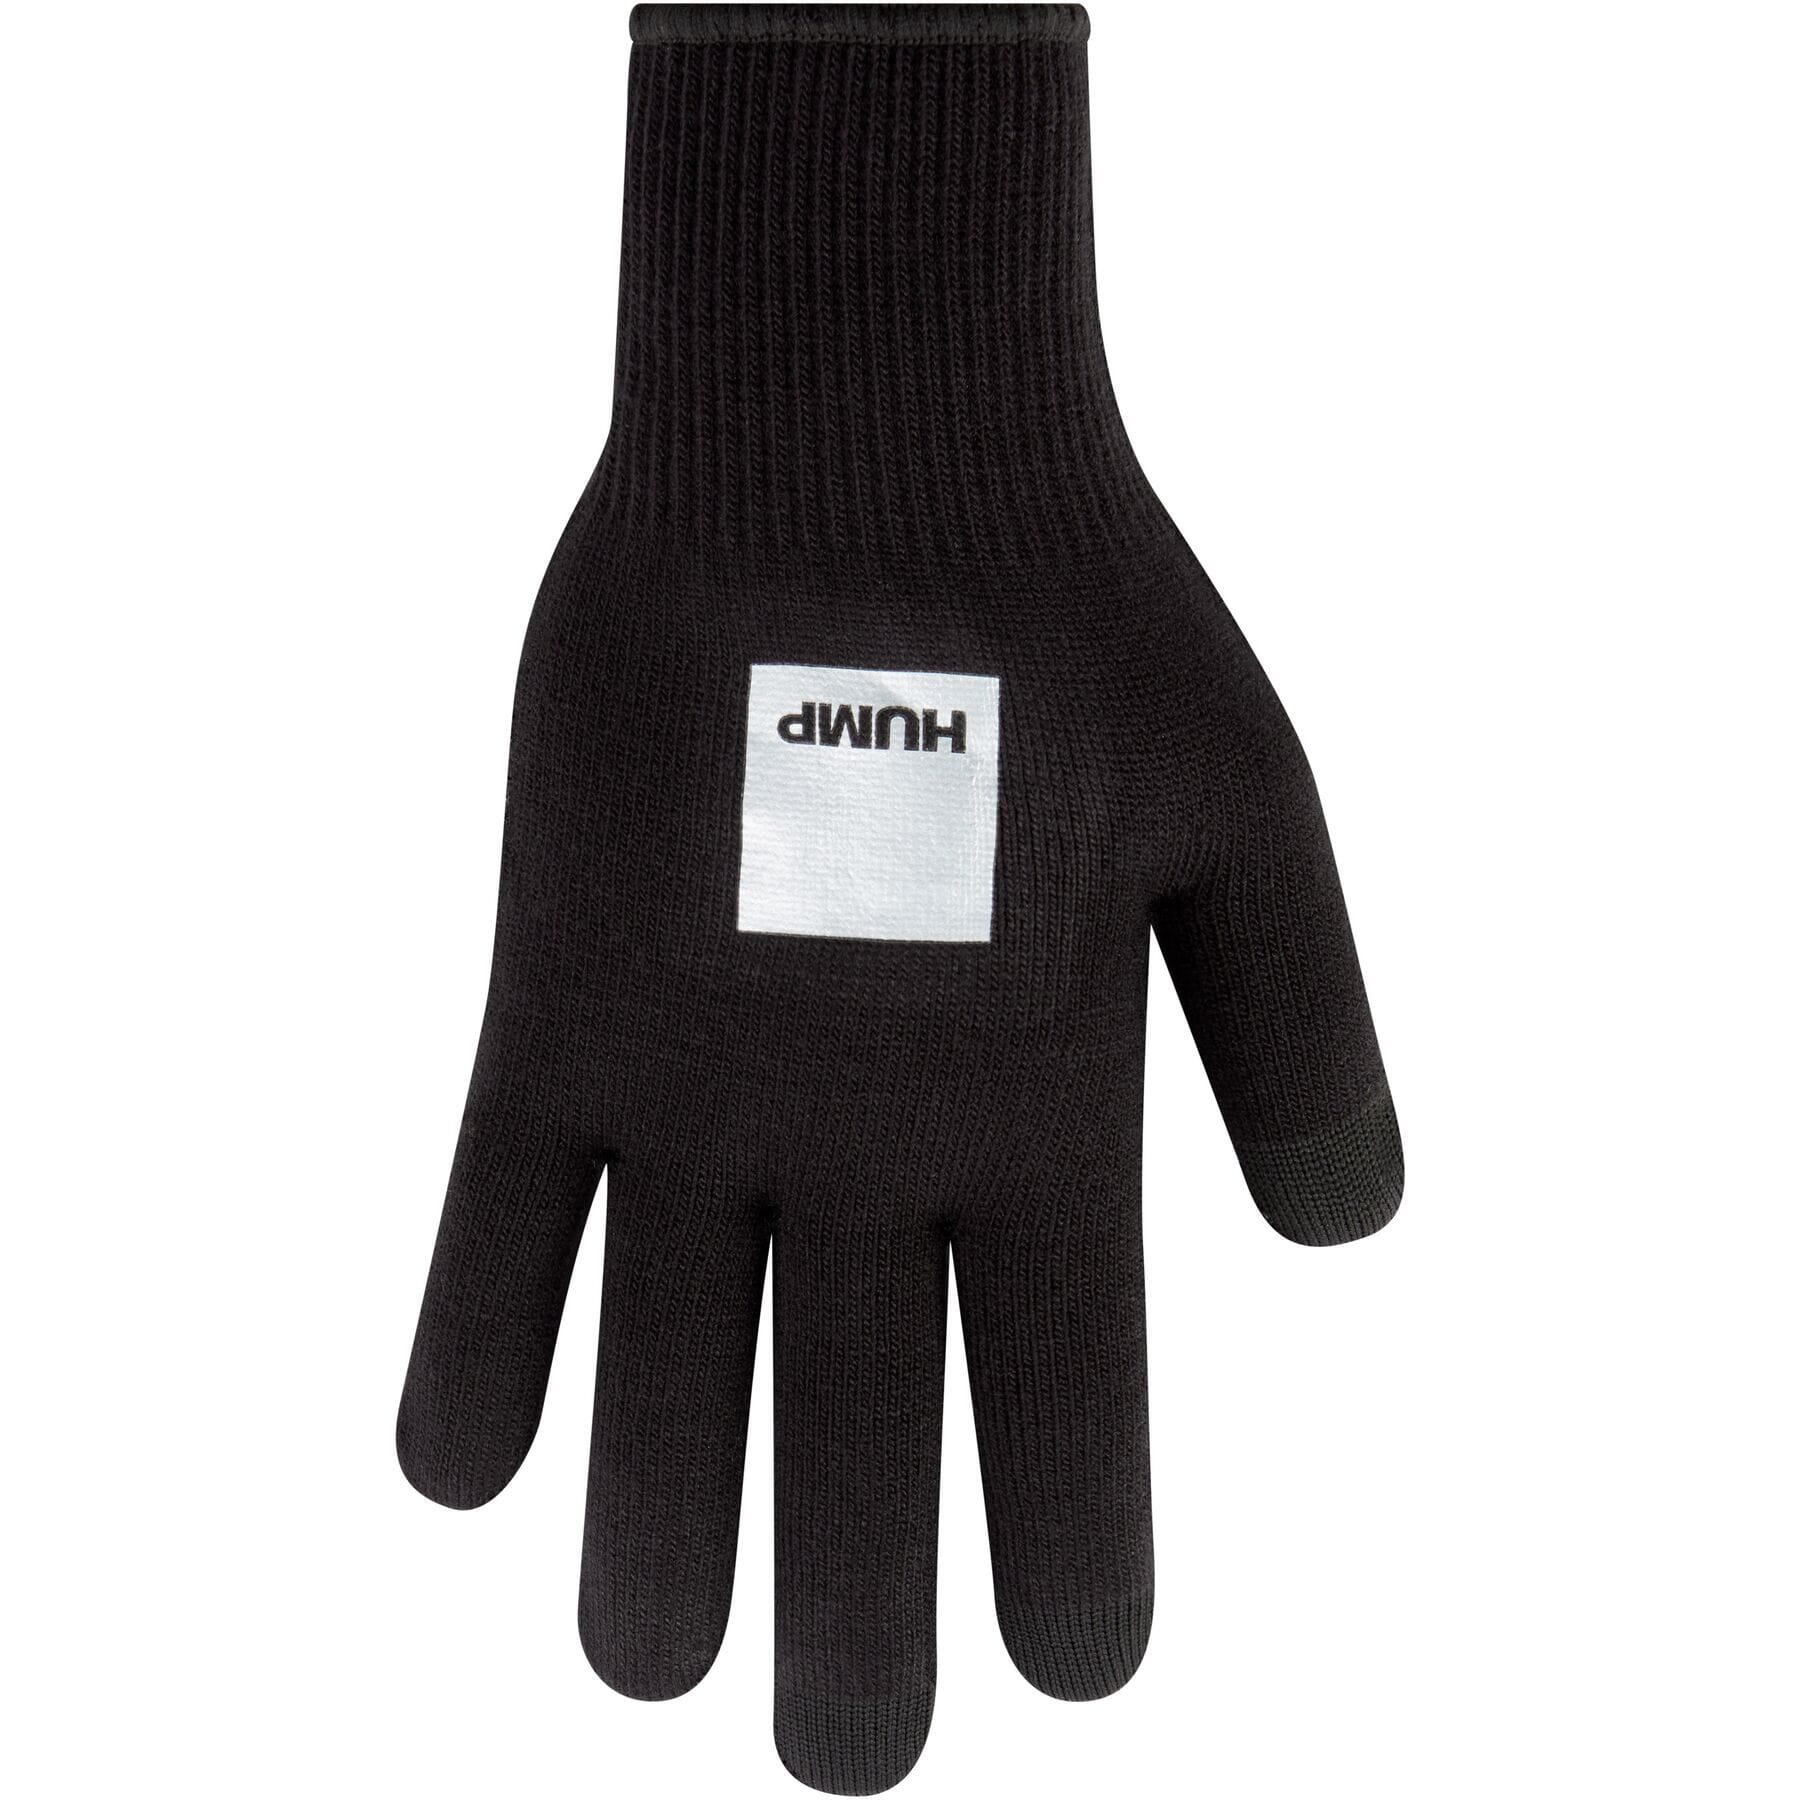 HUMP HUMP Pocket Thermal Glove - Black - Medium - Large